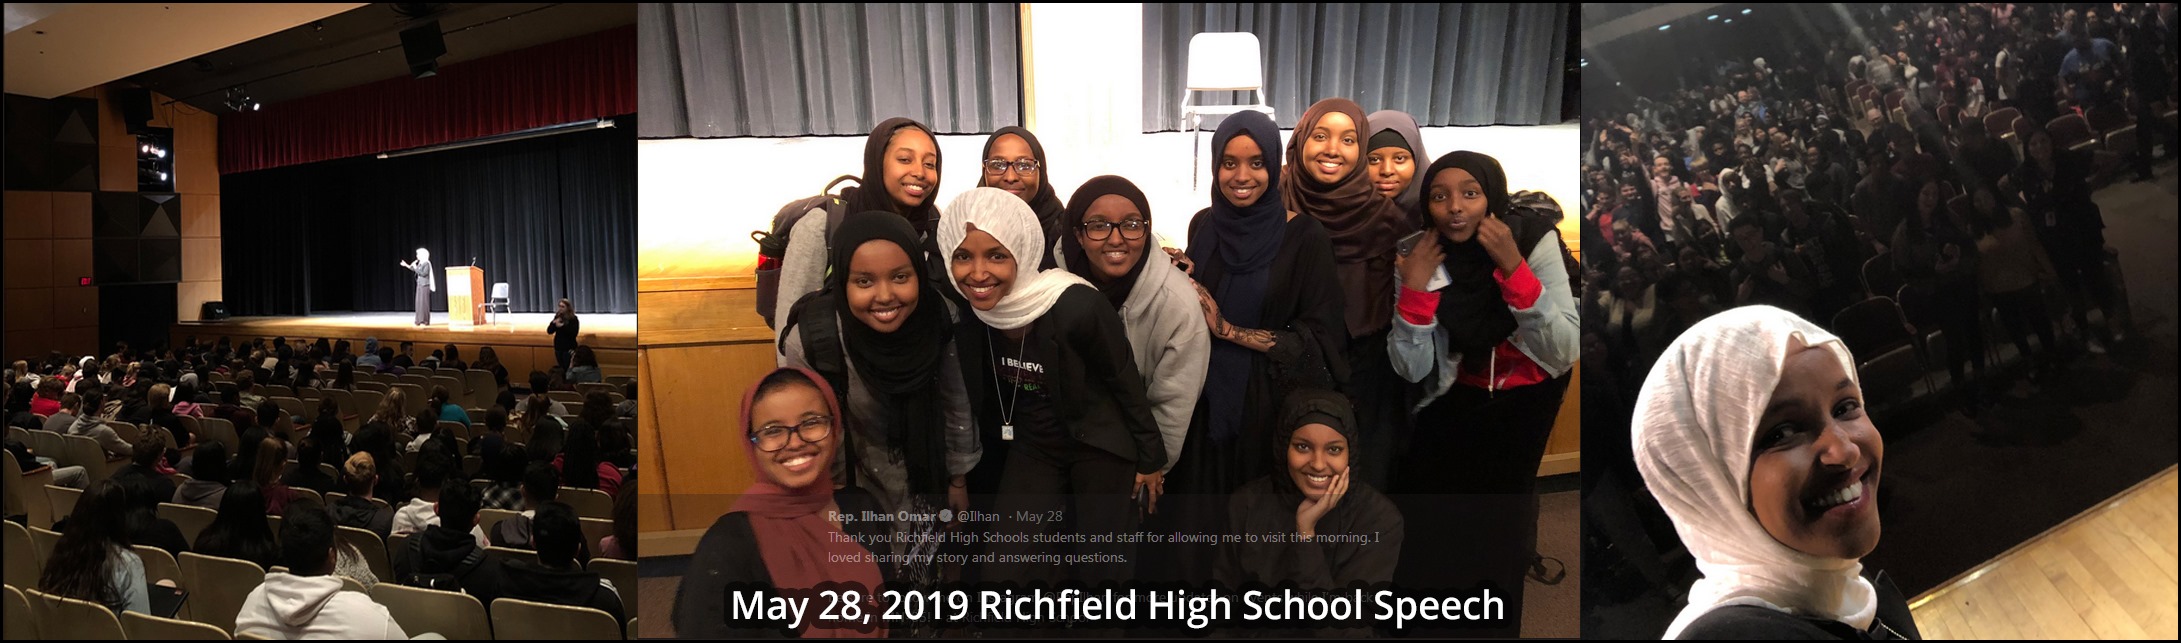 Omar May 28 Richfield High School Visit